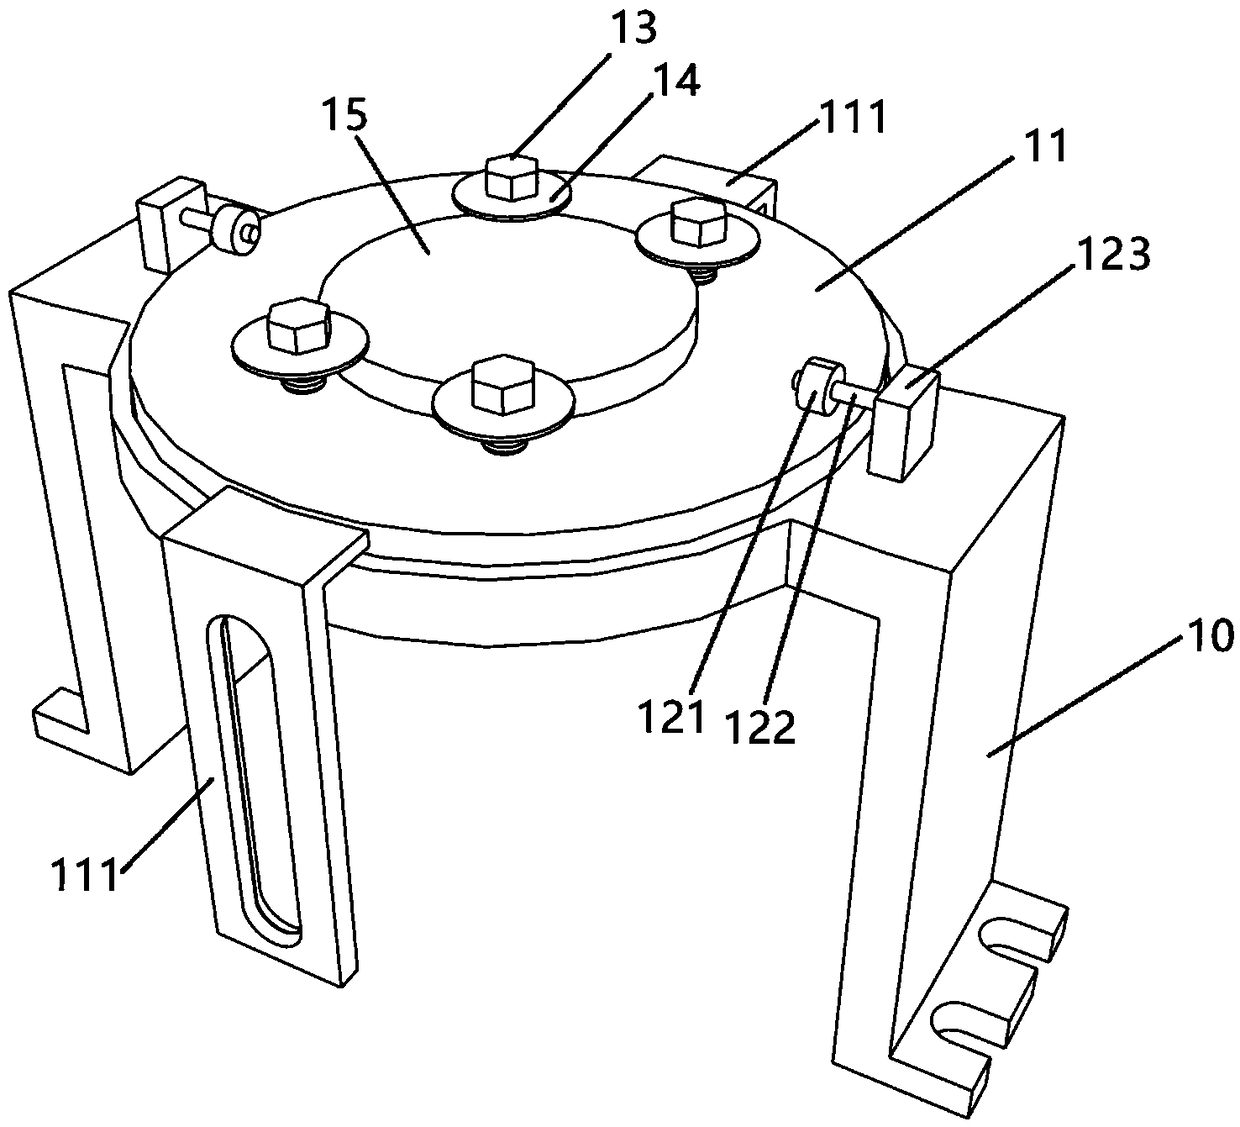 Mechanical torsional vibration table based on double-eccentric-wheel module